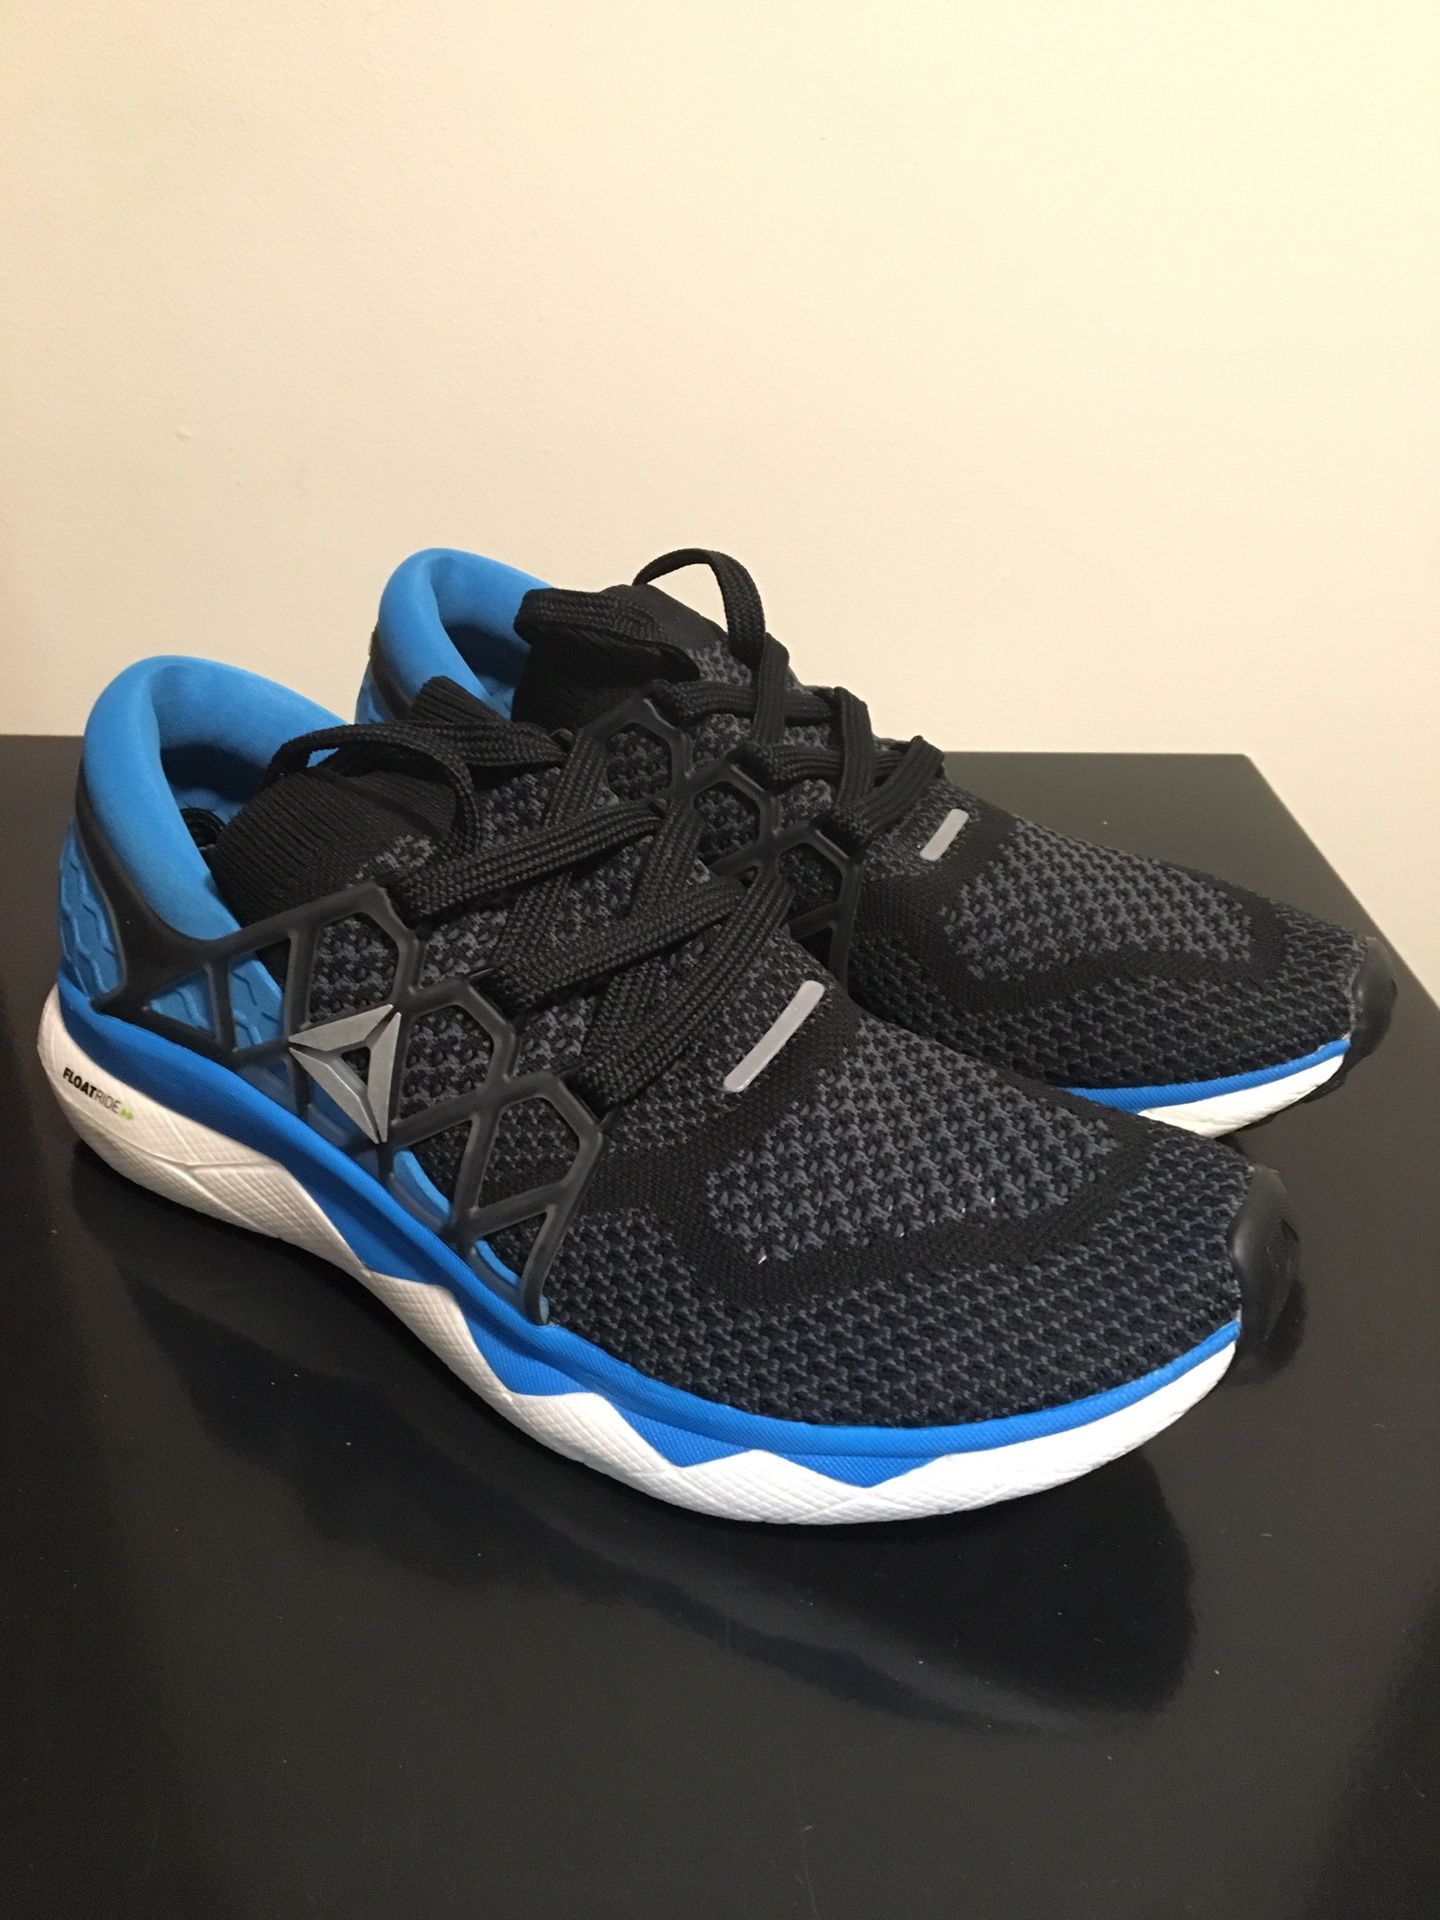 Men's Brand New Reebok Floatride Size 9.5 Black / Blue Shoes